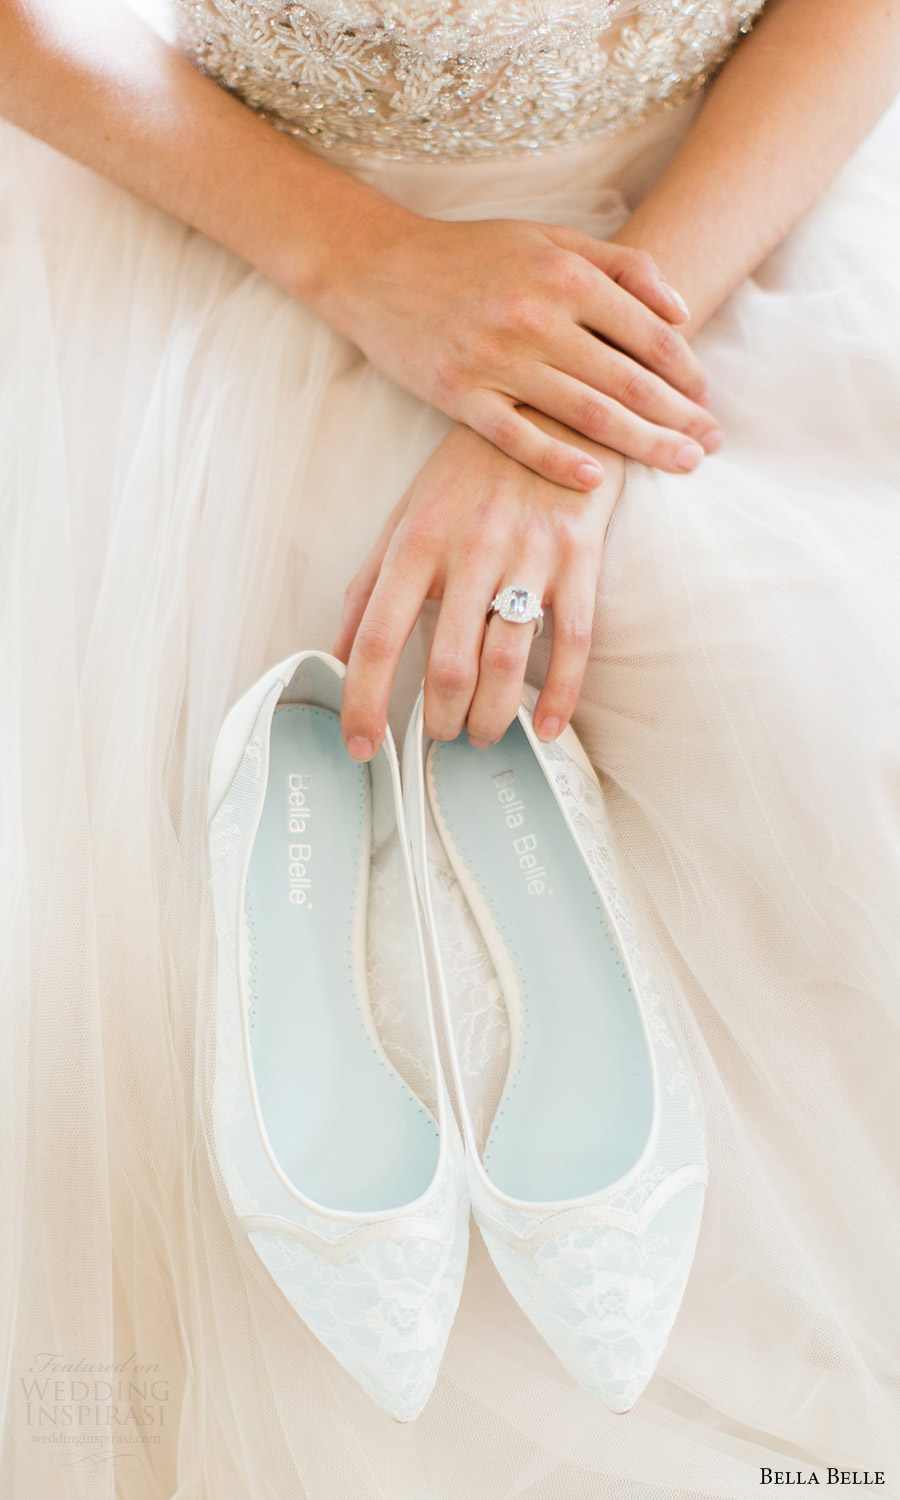 bella belle bridal shoes 2016 sophie scalloped chantily lace flat wedding shoes